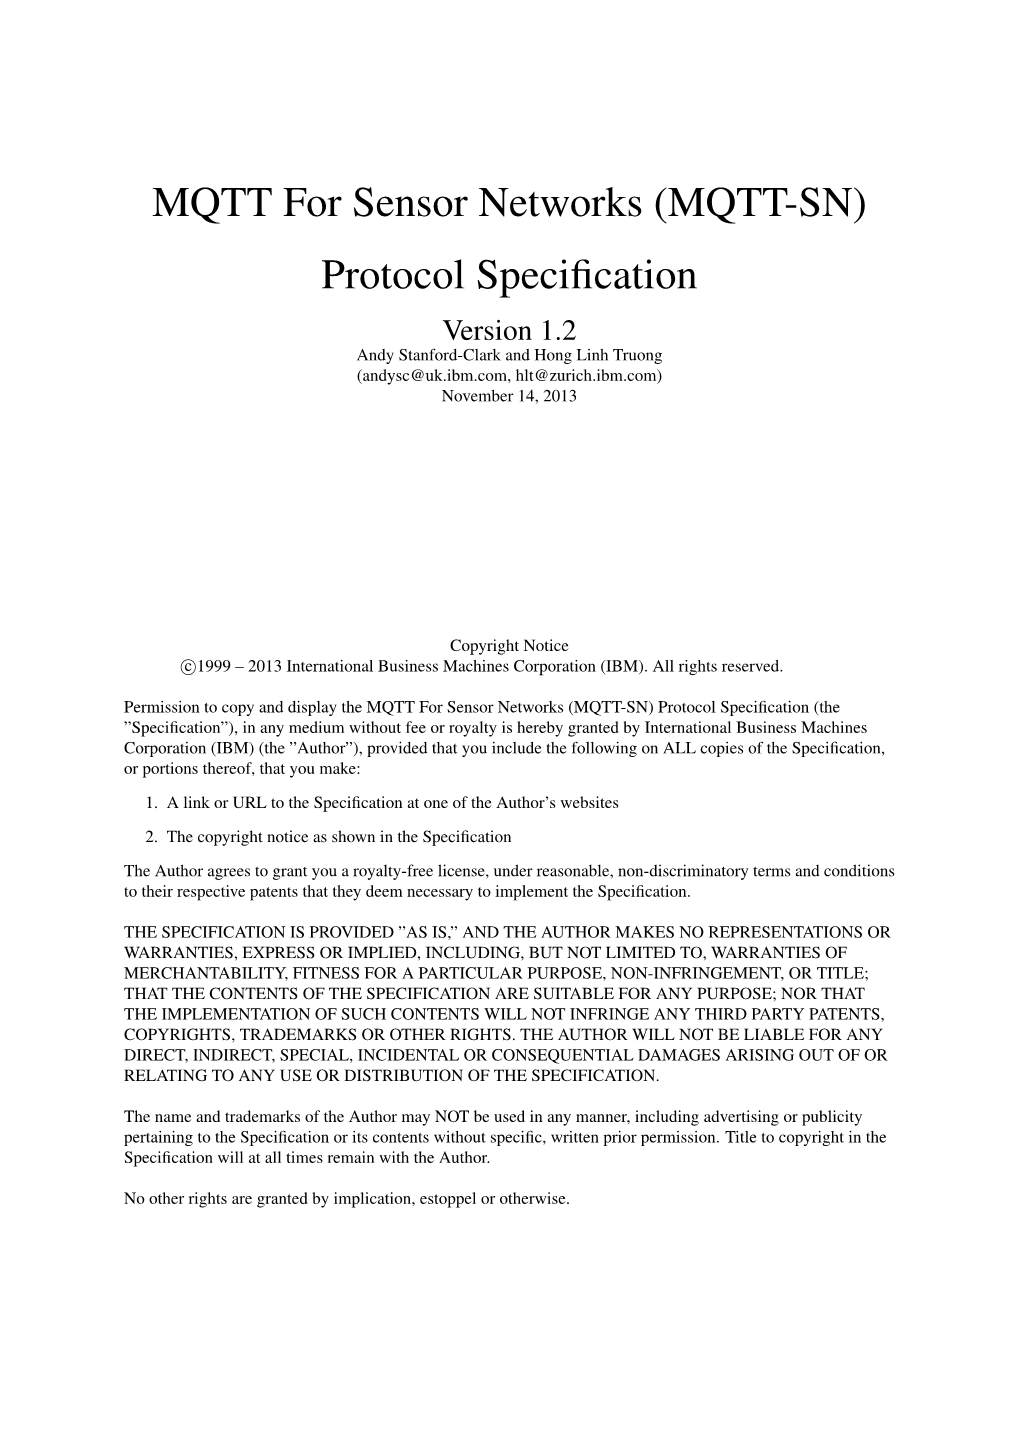 MQTT for Sensor Networks (MQTT-SN) Protocol Specification